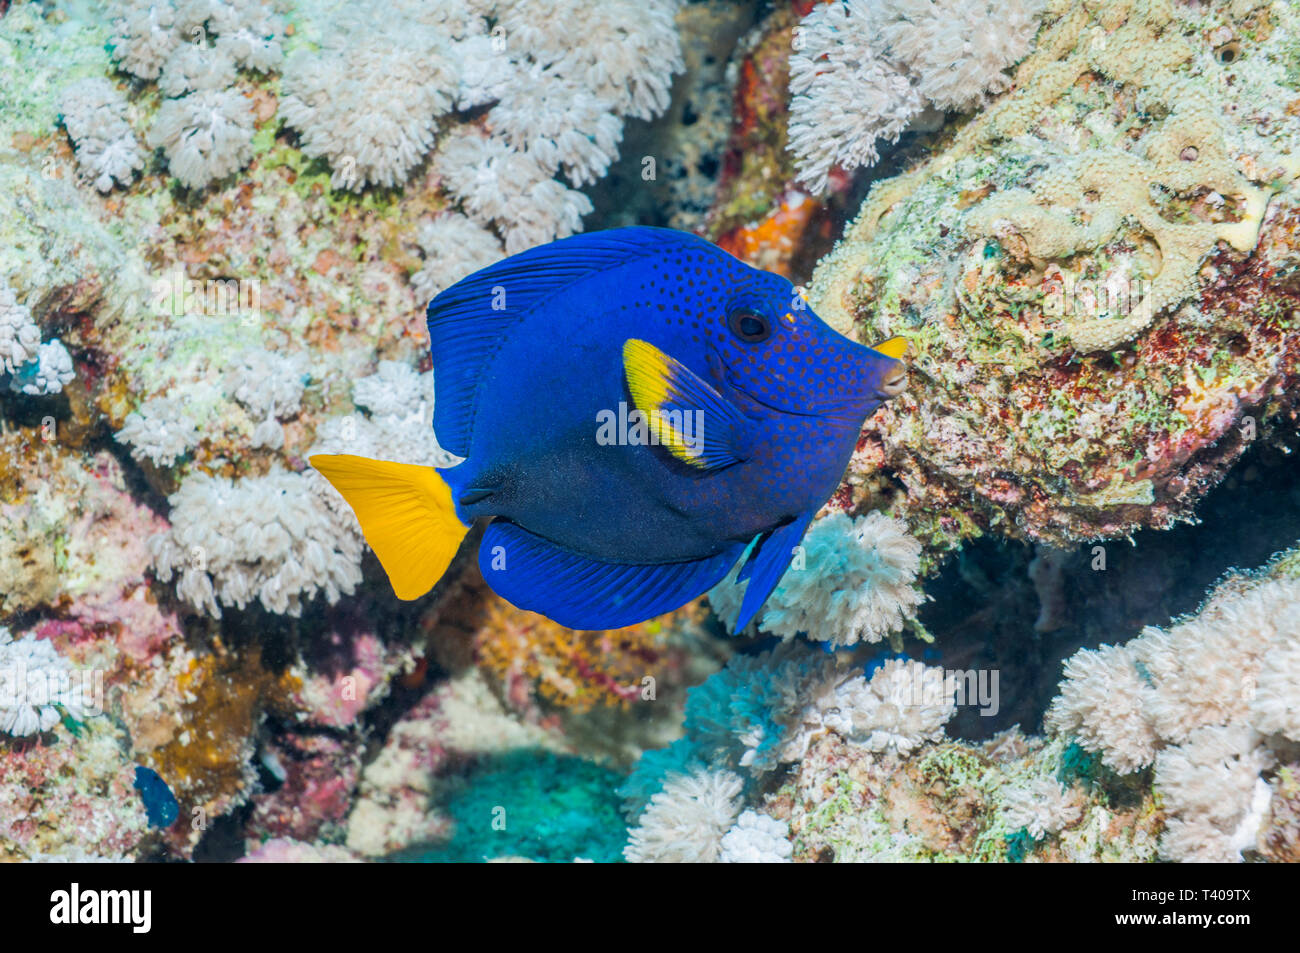 Yellowtail tang or surgeonfish (Zebrasoma xanthurum).  Egypt, Red Sea. Stock Photo